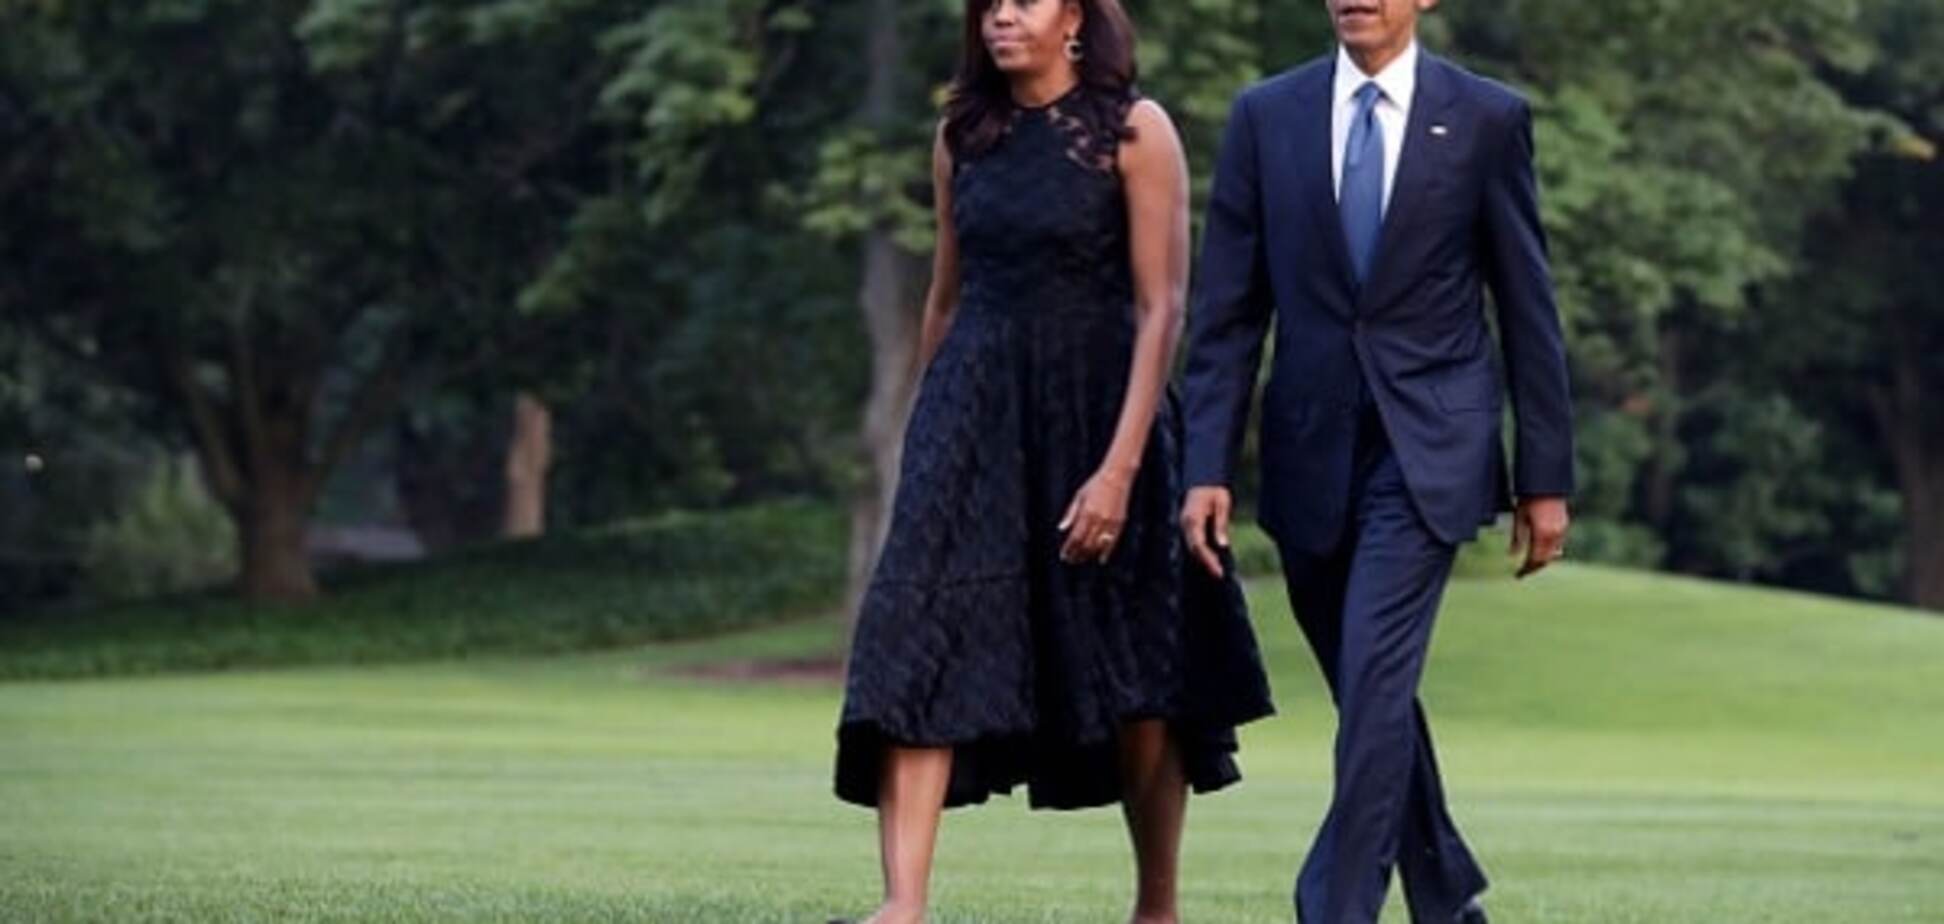 Michelle Obama\u0026Barak Obama